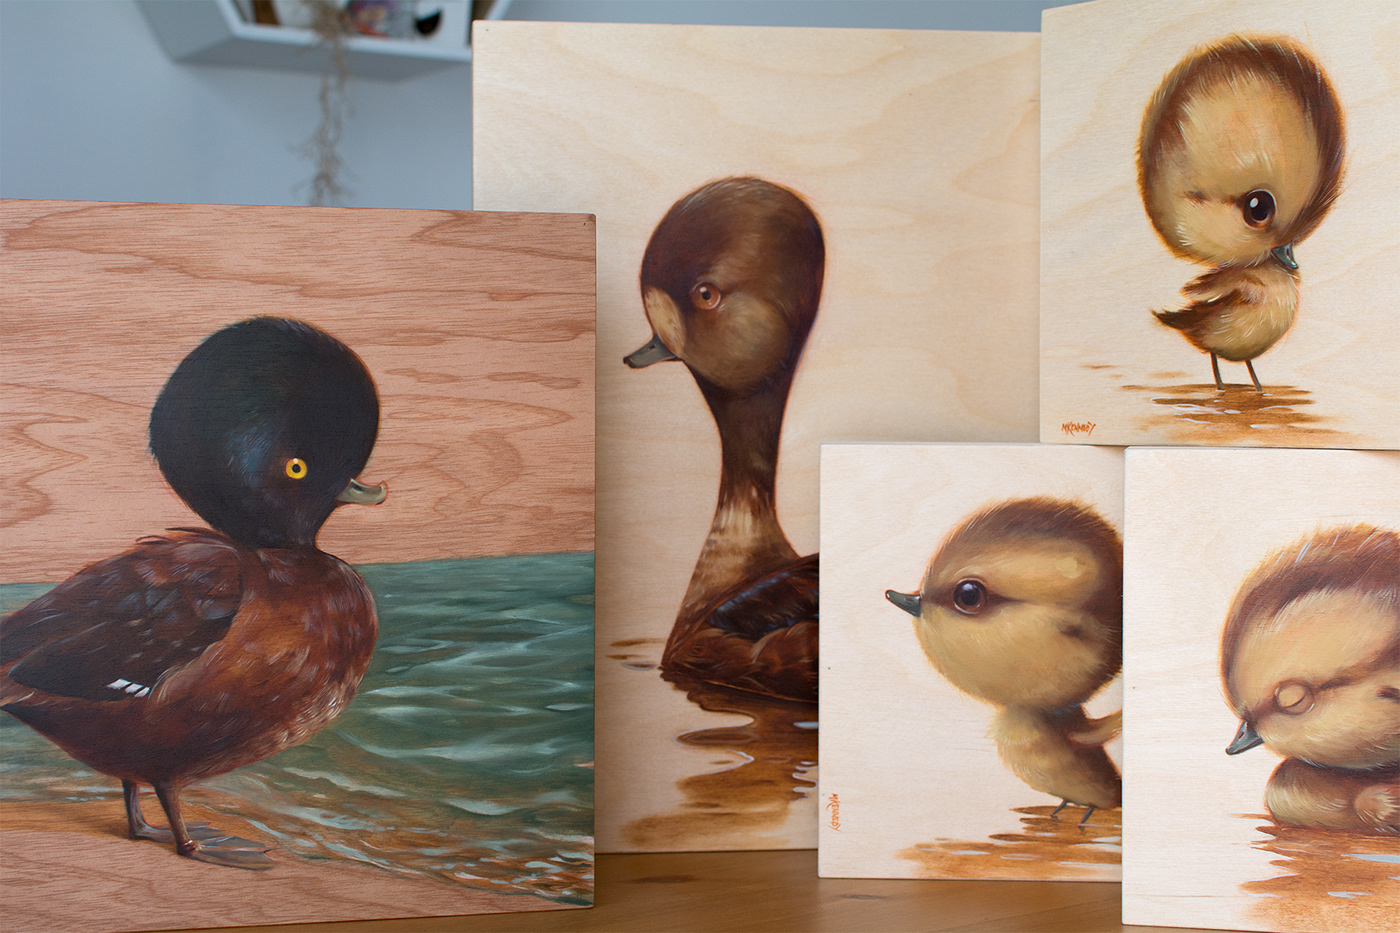 New Zealand wildlife ducks ducklings cute bizarre Paintings silly fluffy birds